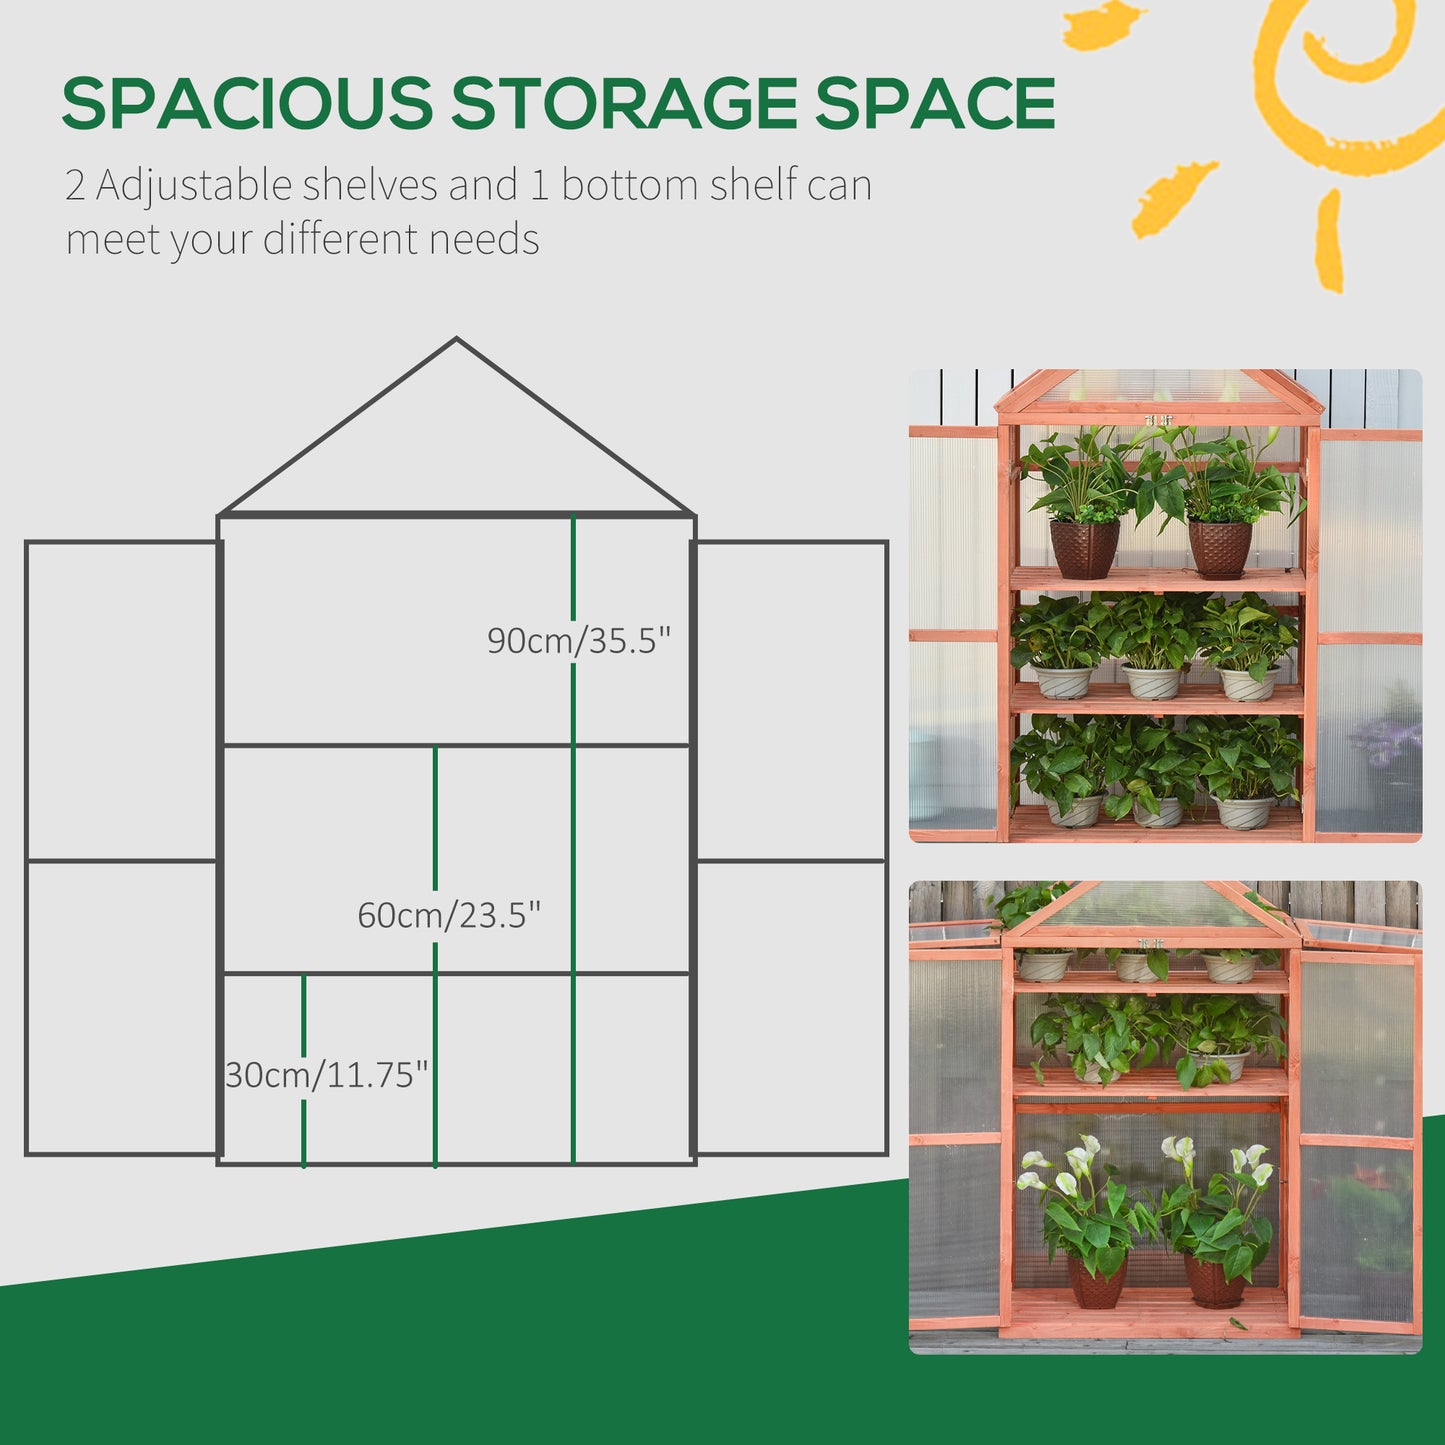 Outsunny 3-Tier Wooden Cold Frame Greenhouse Garden Polycarbonate Grow House w/ Adjustable Shelves, Double Doors, 80 x 47 x 138 cm, Orange